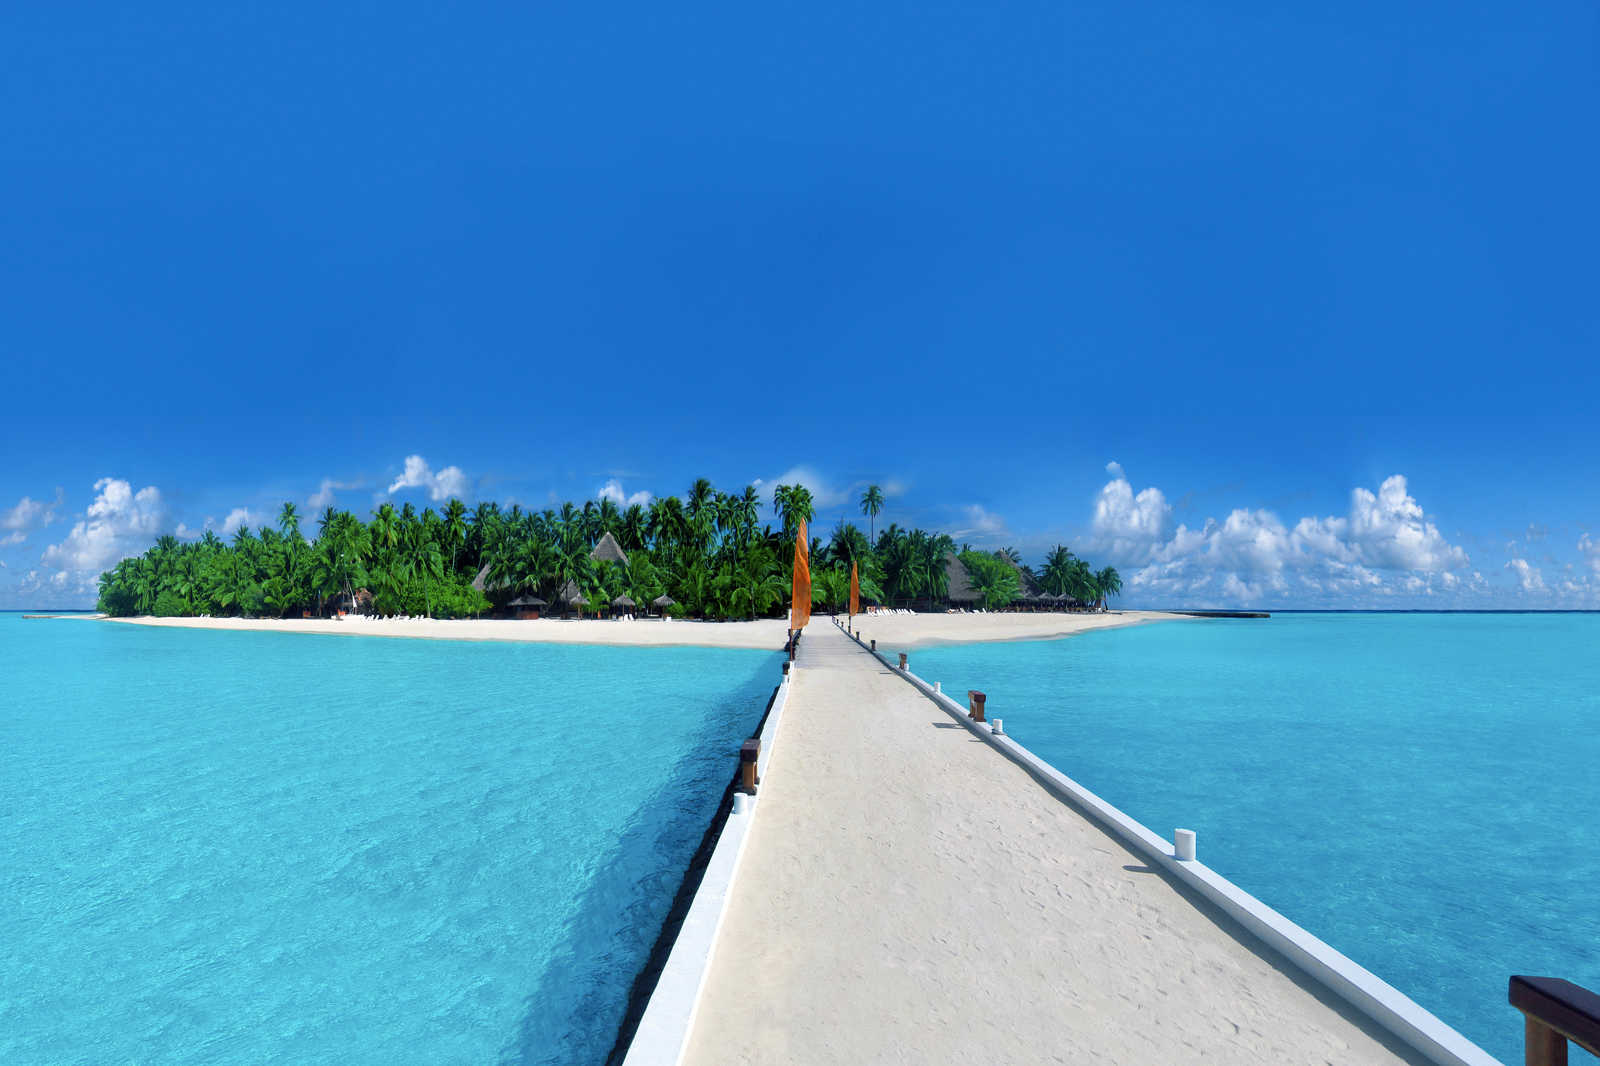             Leinwandbild Insel mit Steg zum Strand – 1,20 m x 0,80 m
        